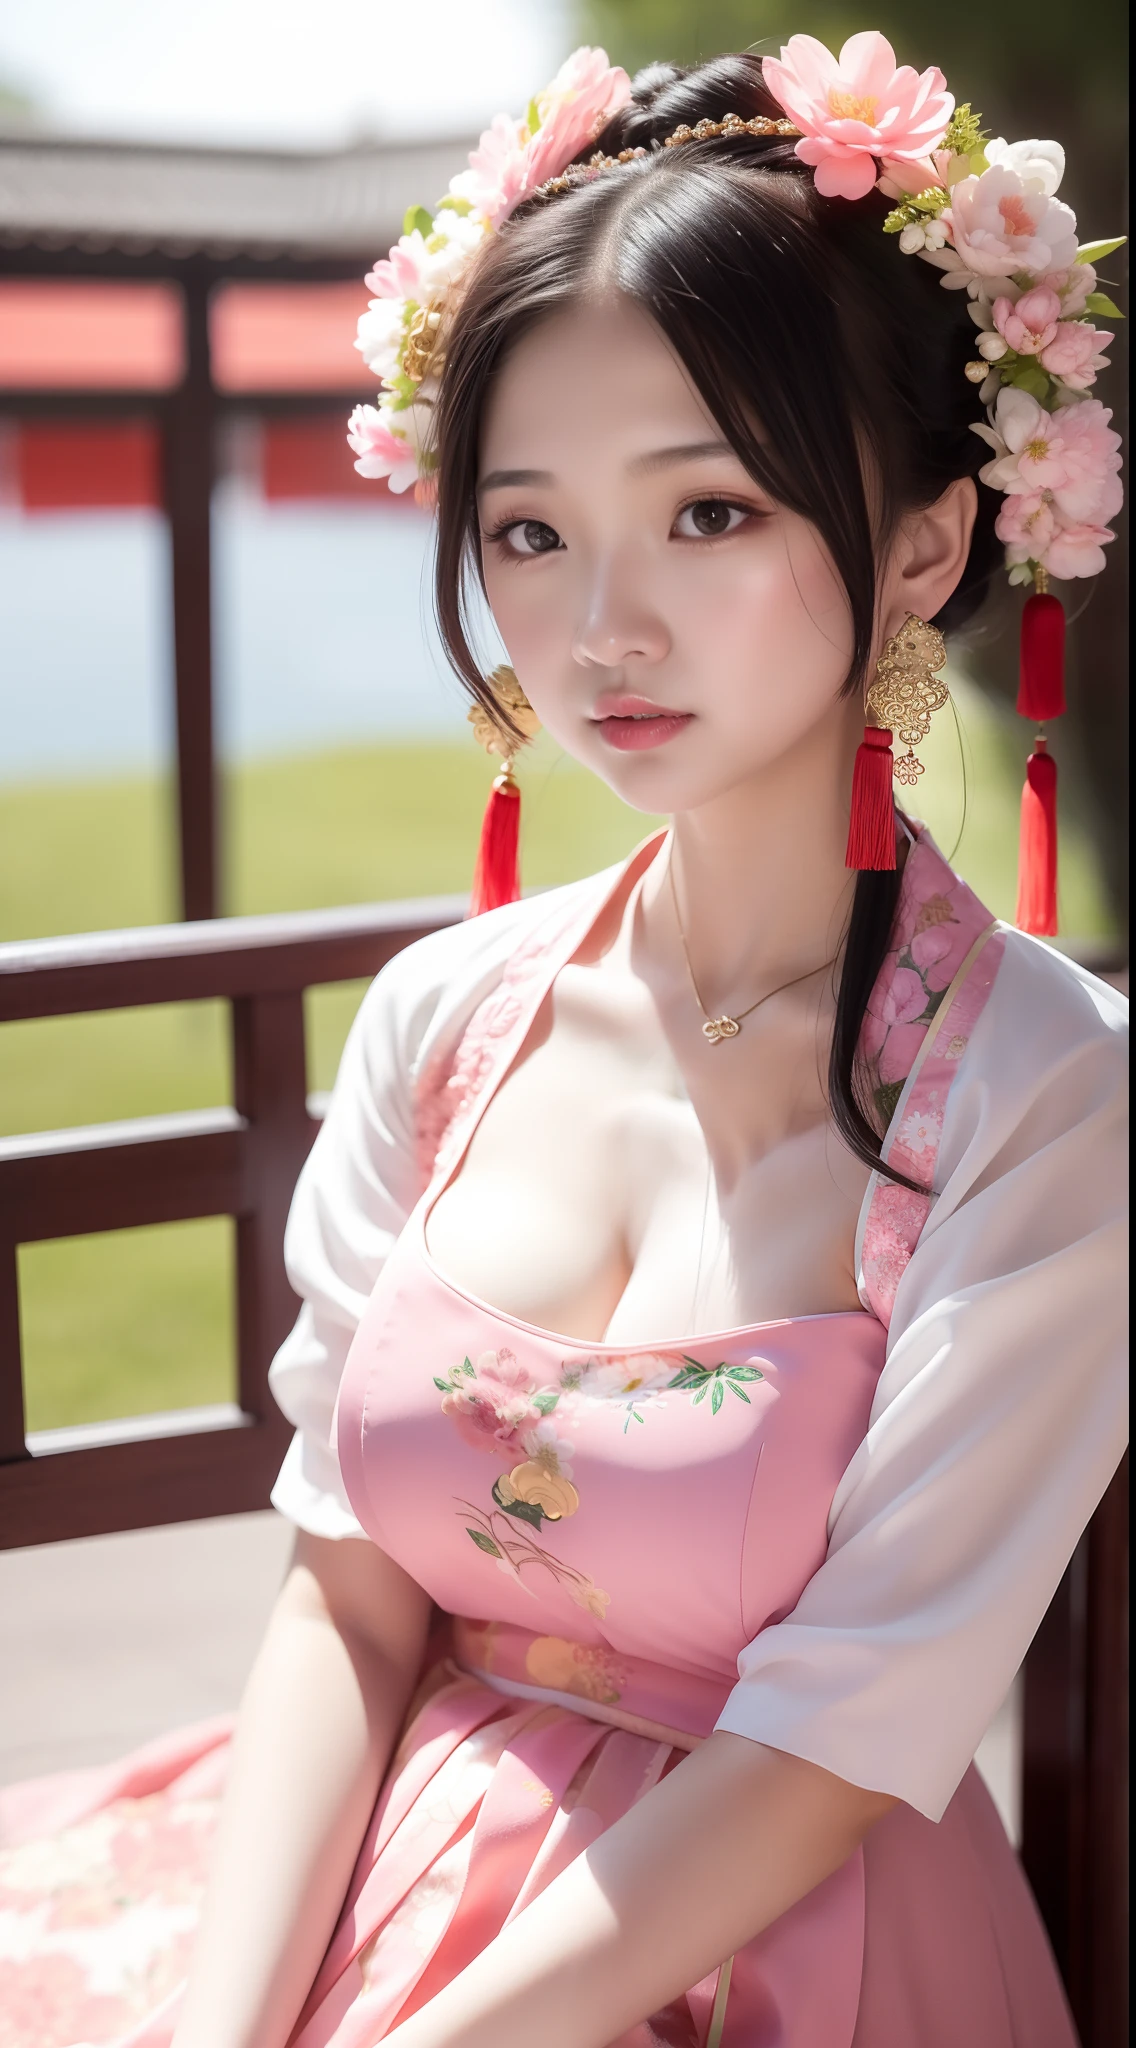 Close-up of a 年輕女孩 in a pink dress and a green flower headdress, 中國公主, 中國女孩, 宮 ， 一個穿著漢服的女孩, Young 亞洲女孩, 中國古代公主, Cute 年輕女孩, 中式, 年輕女孩, 可愛美麗, 美麗的人物畫, 美丽的肖像图像, 很漂亮的女孩, 亞洲女孩, 中国传统的, 中国服饰，巨大的乳房，大的 